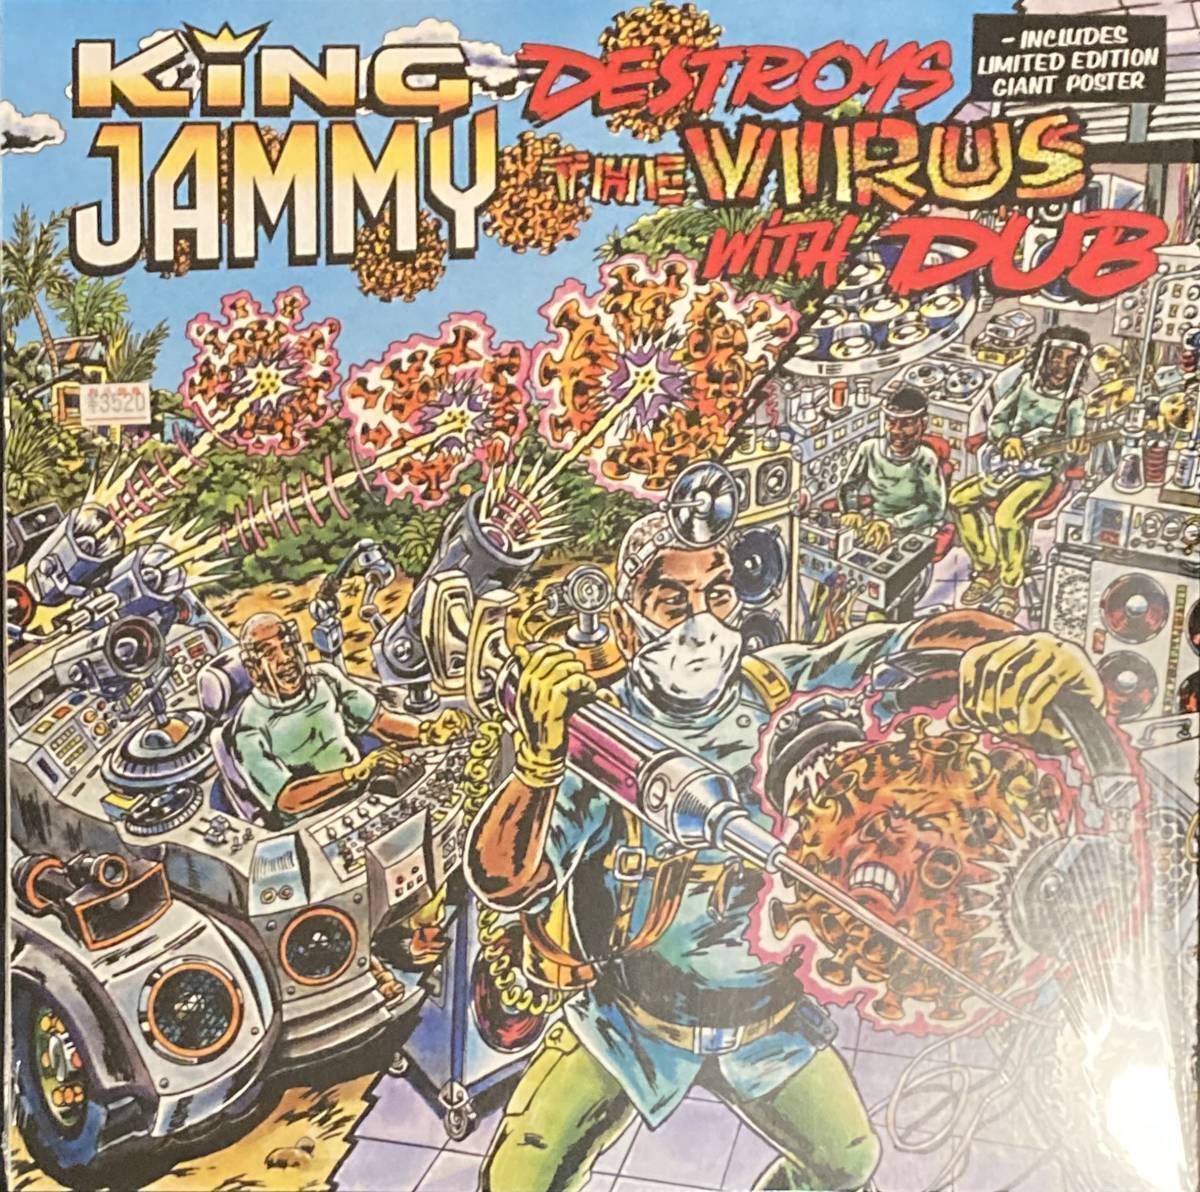 King Jammy - Destroys The Virus With Dub レゲエ・ダブ_画像1